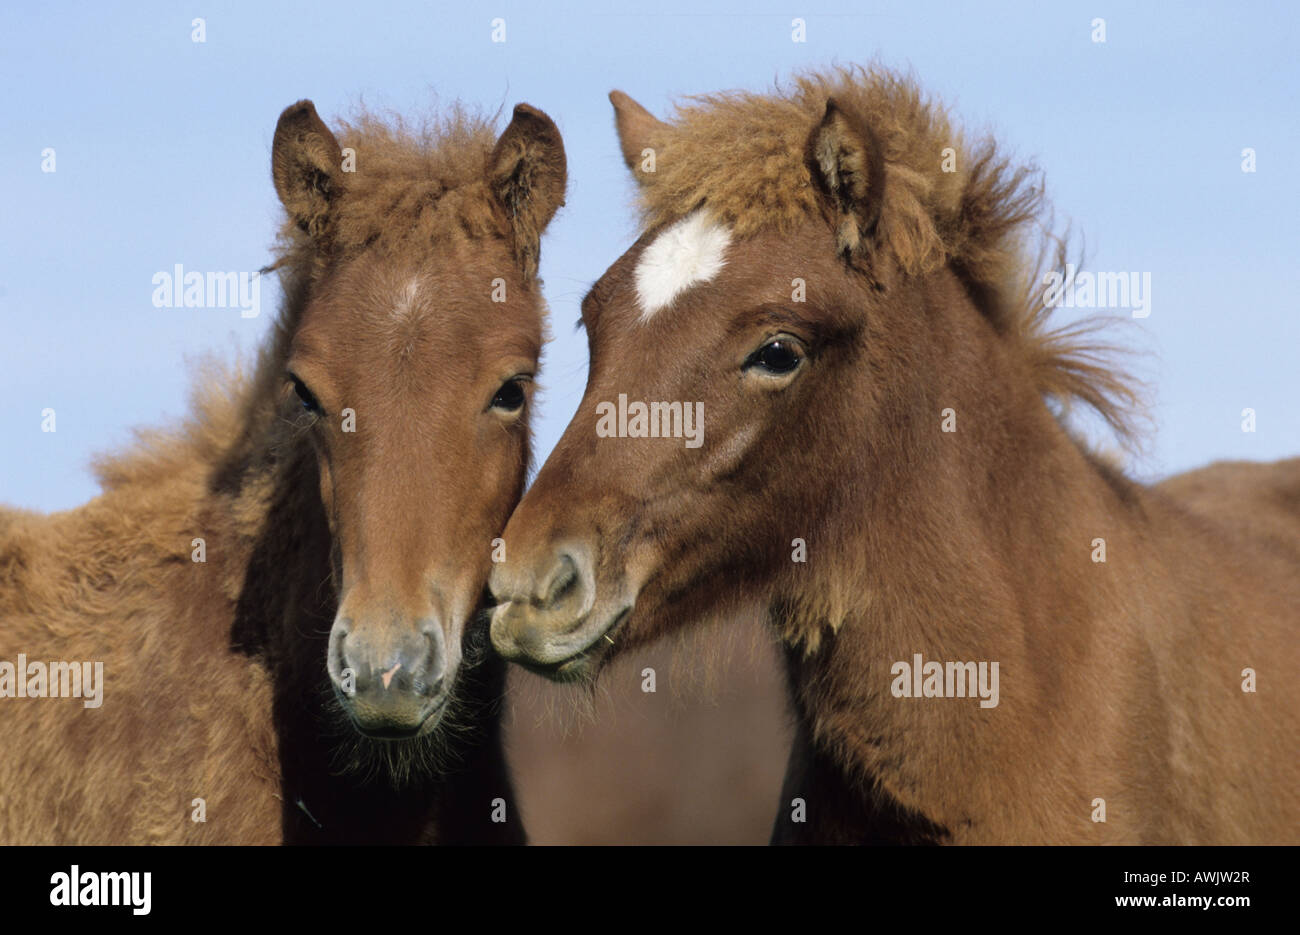 Cavallo islandese (Equus caballus), due puledri sniffing in corrispondenza di ciascun altro Foto Stock